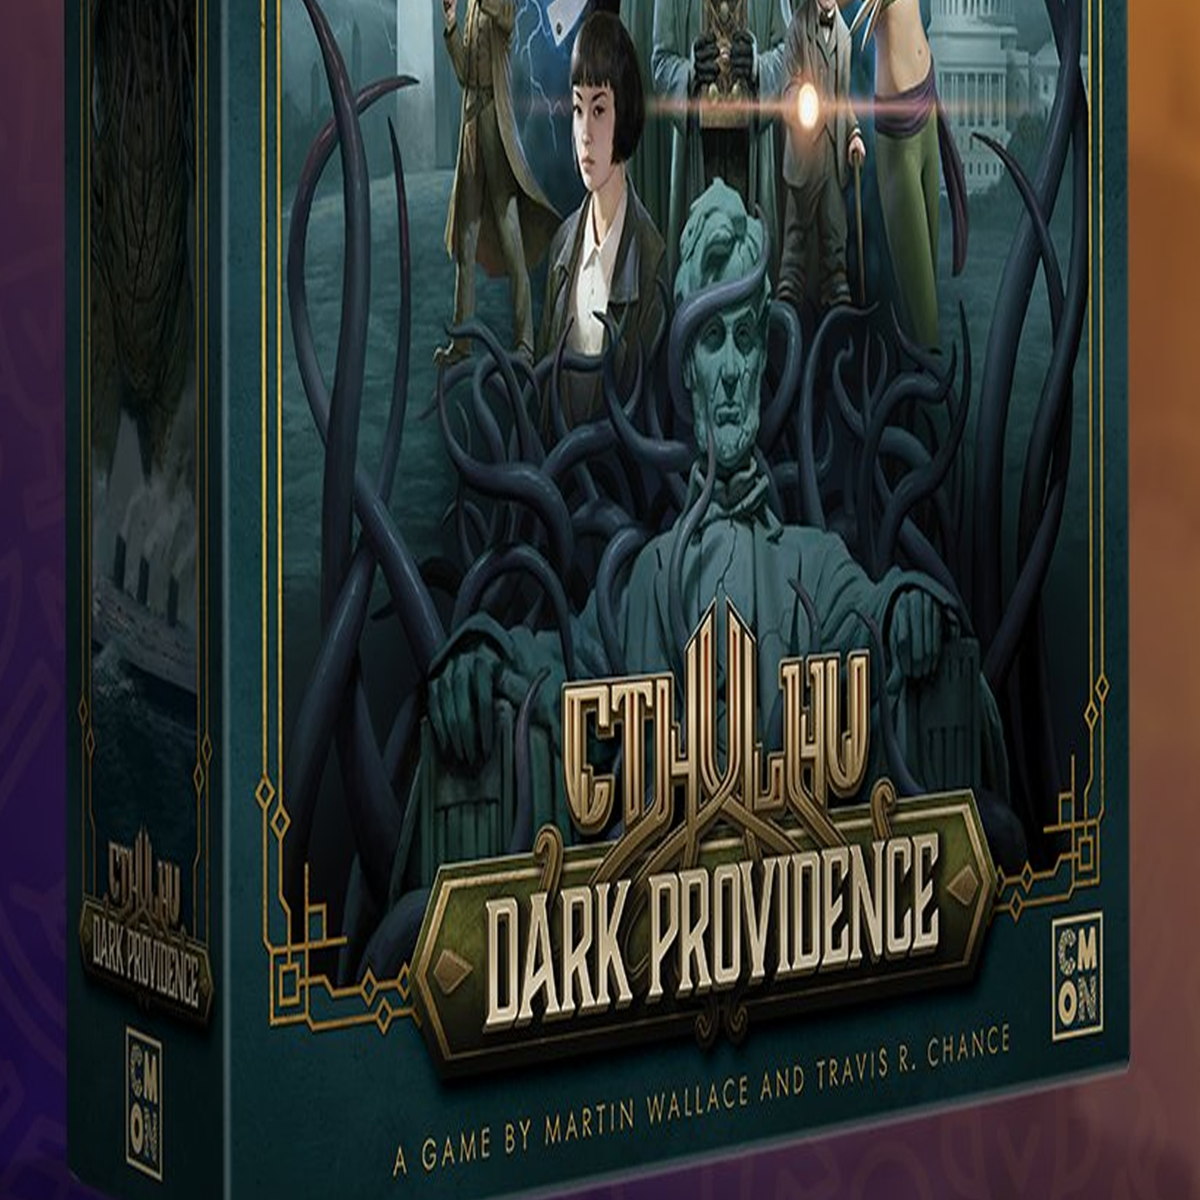 Cthulhu: Dark Providence